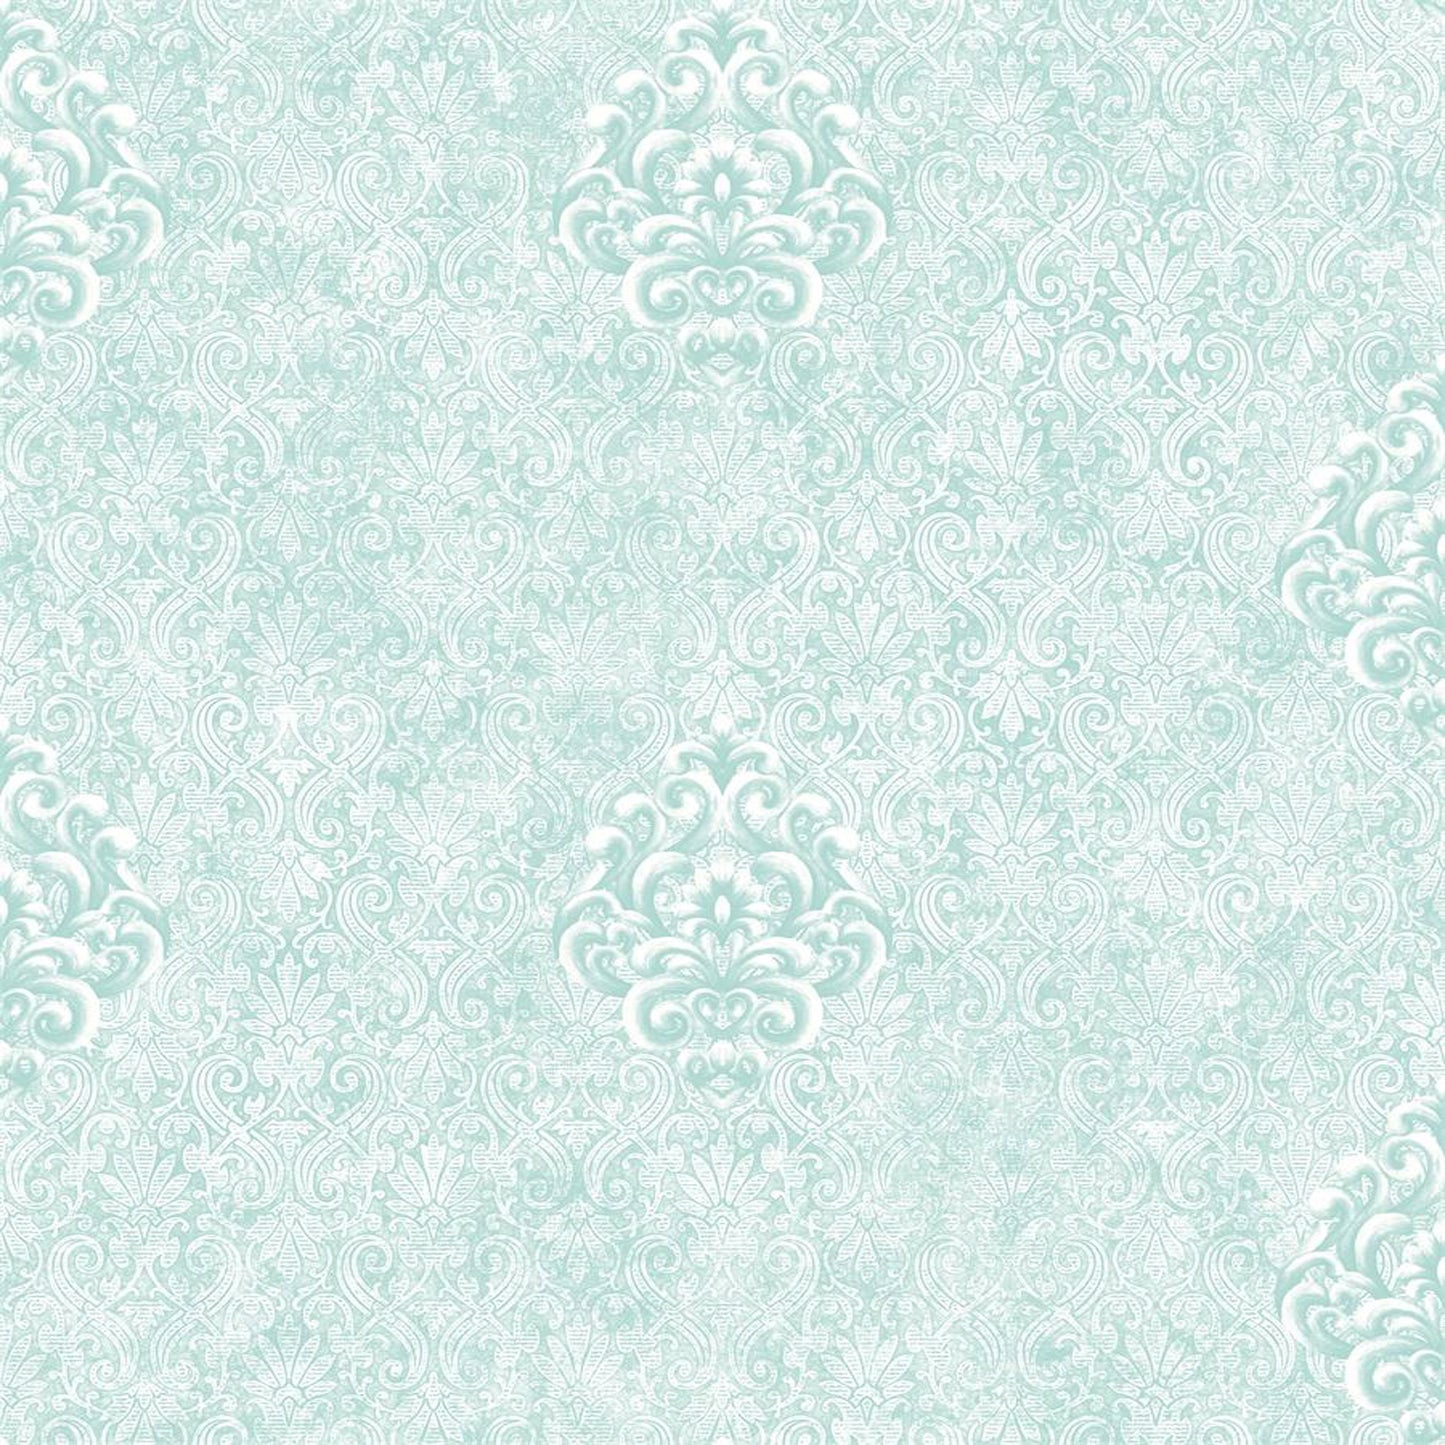 Frosty Damask Victorian Wallpaper Design